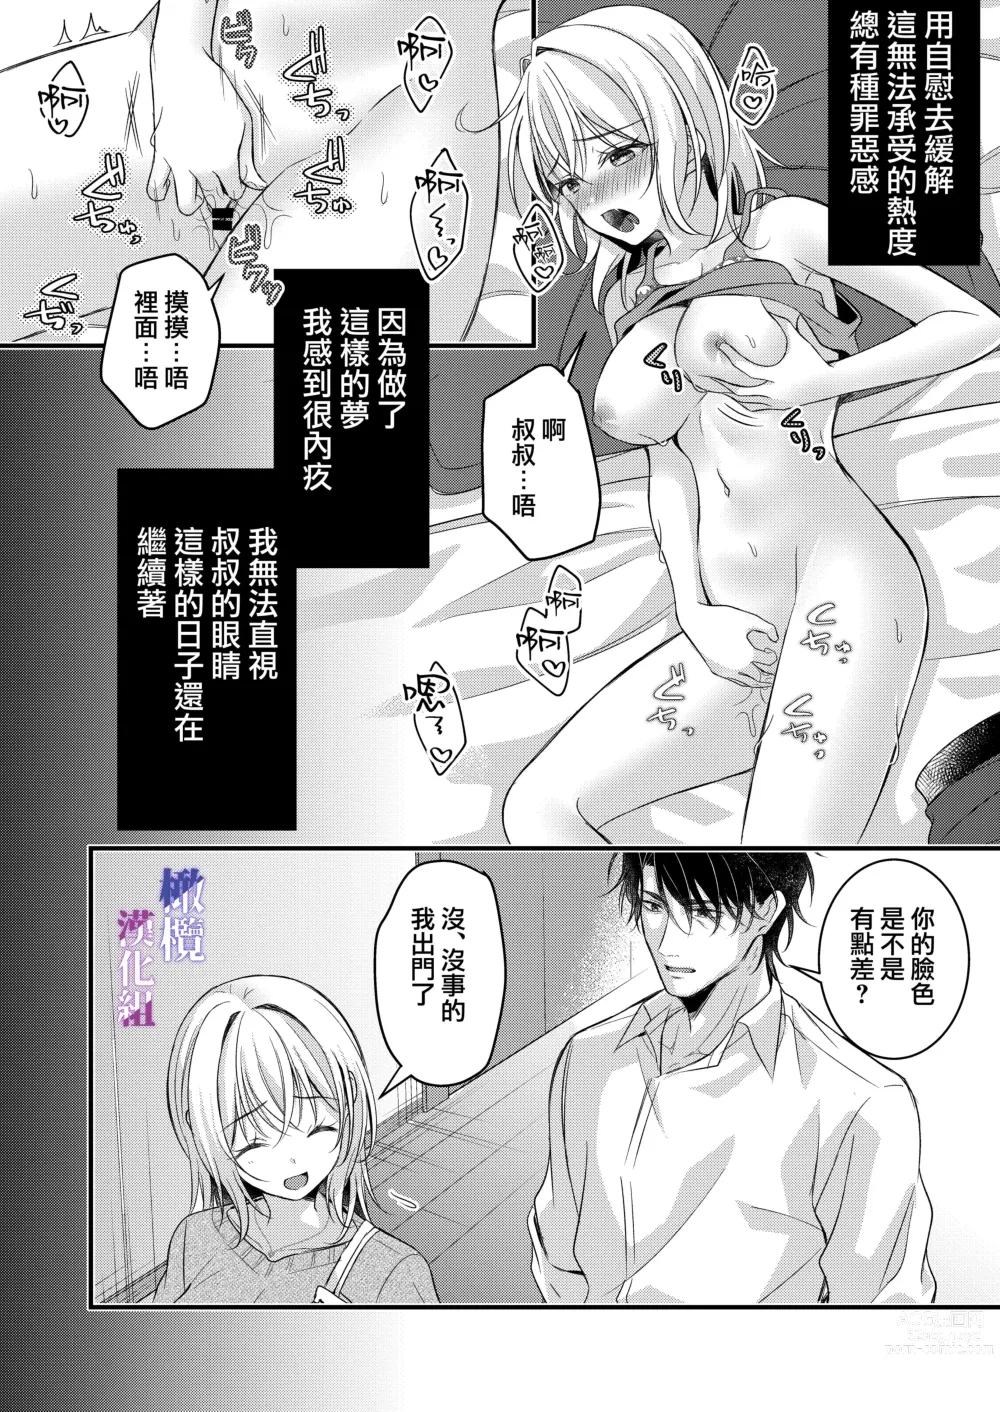 Page 17 of doujinshi 梦见了与叔叔淫乱的梦